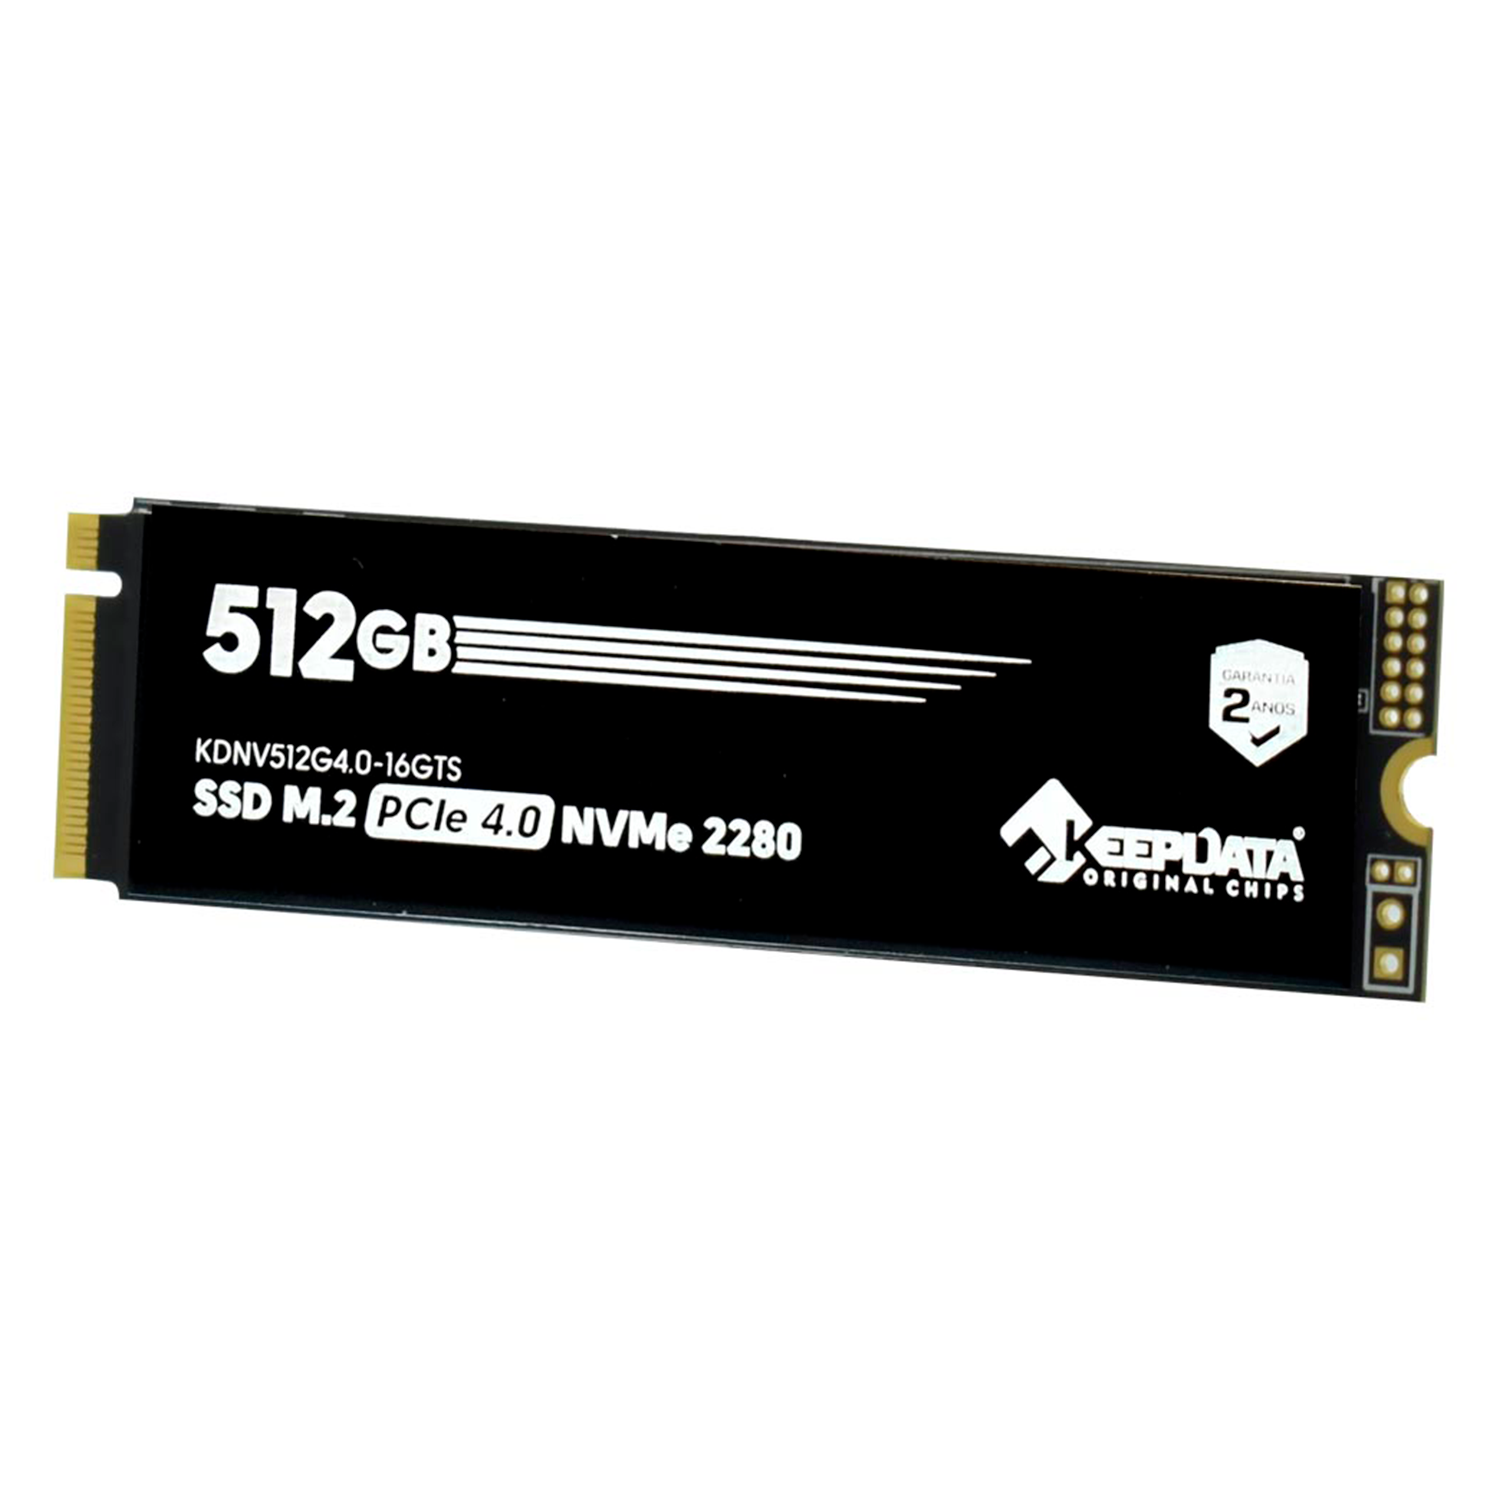 SSD Keepdata 512GB / NVME 4.0 / Dissipation - (KDNV512G4.0-16GTS)